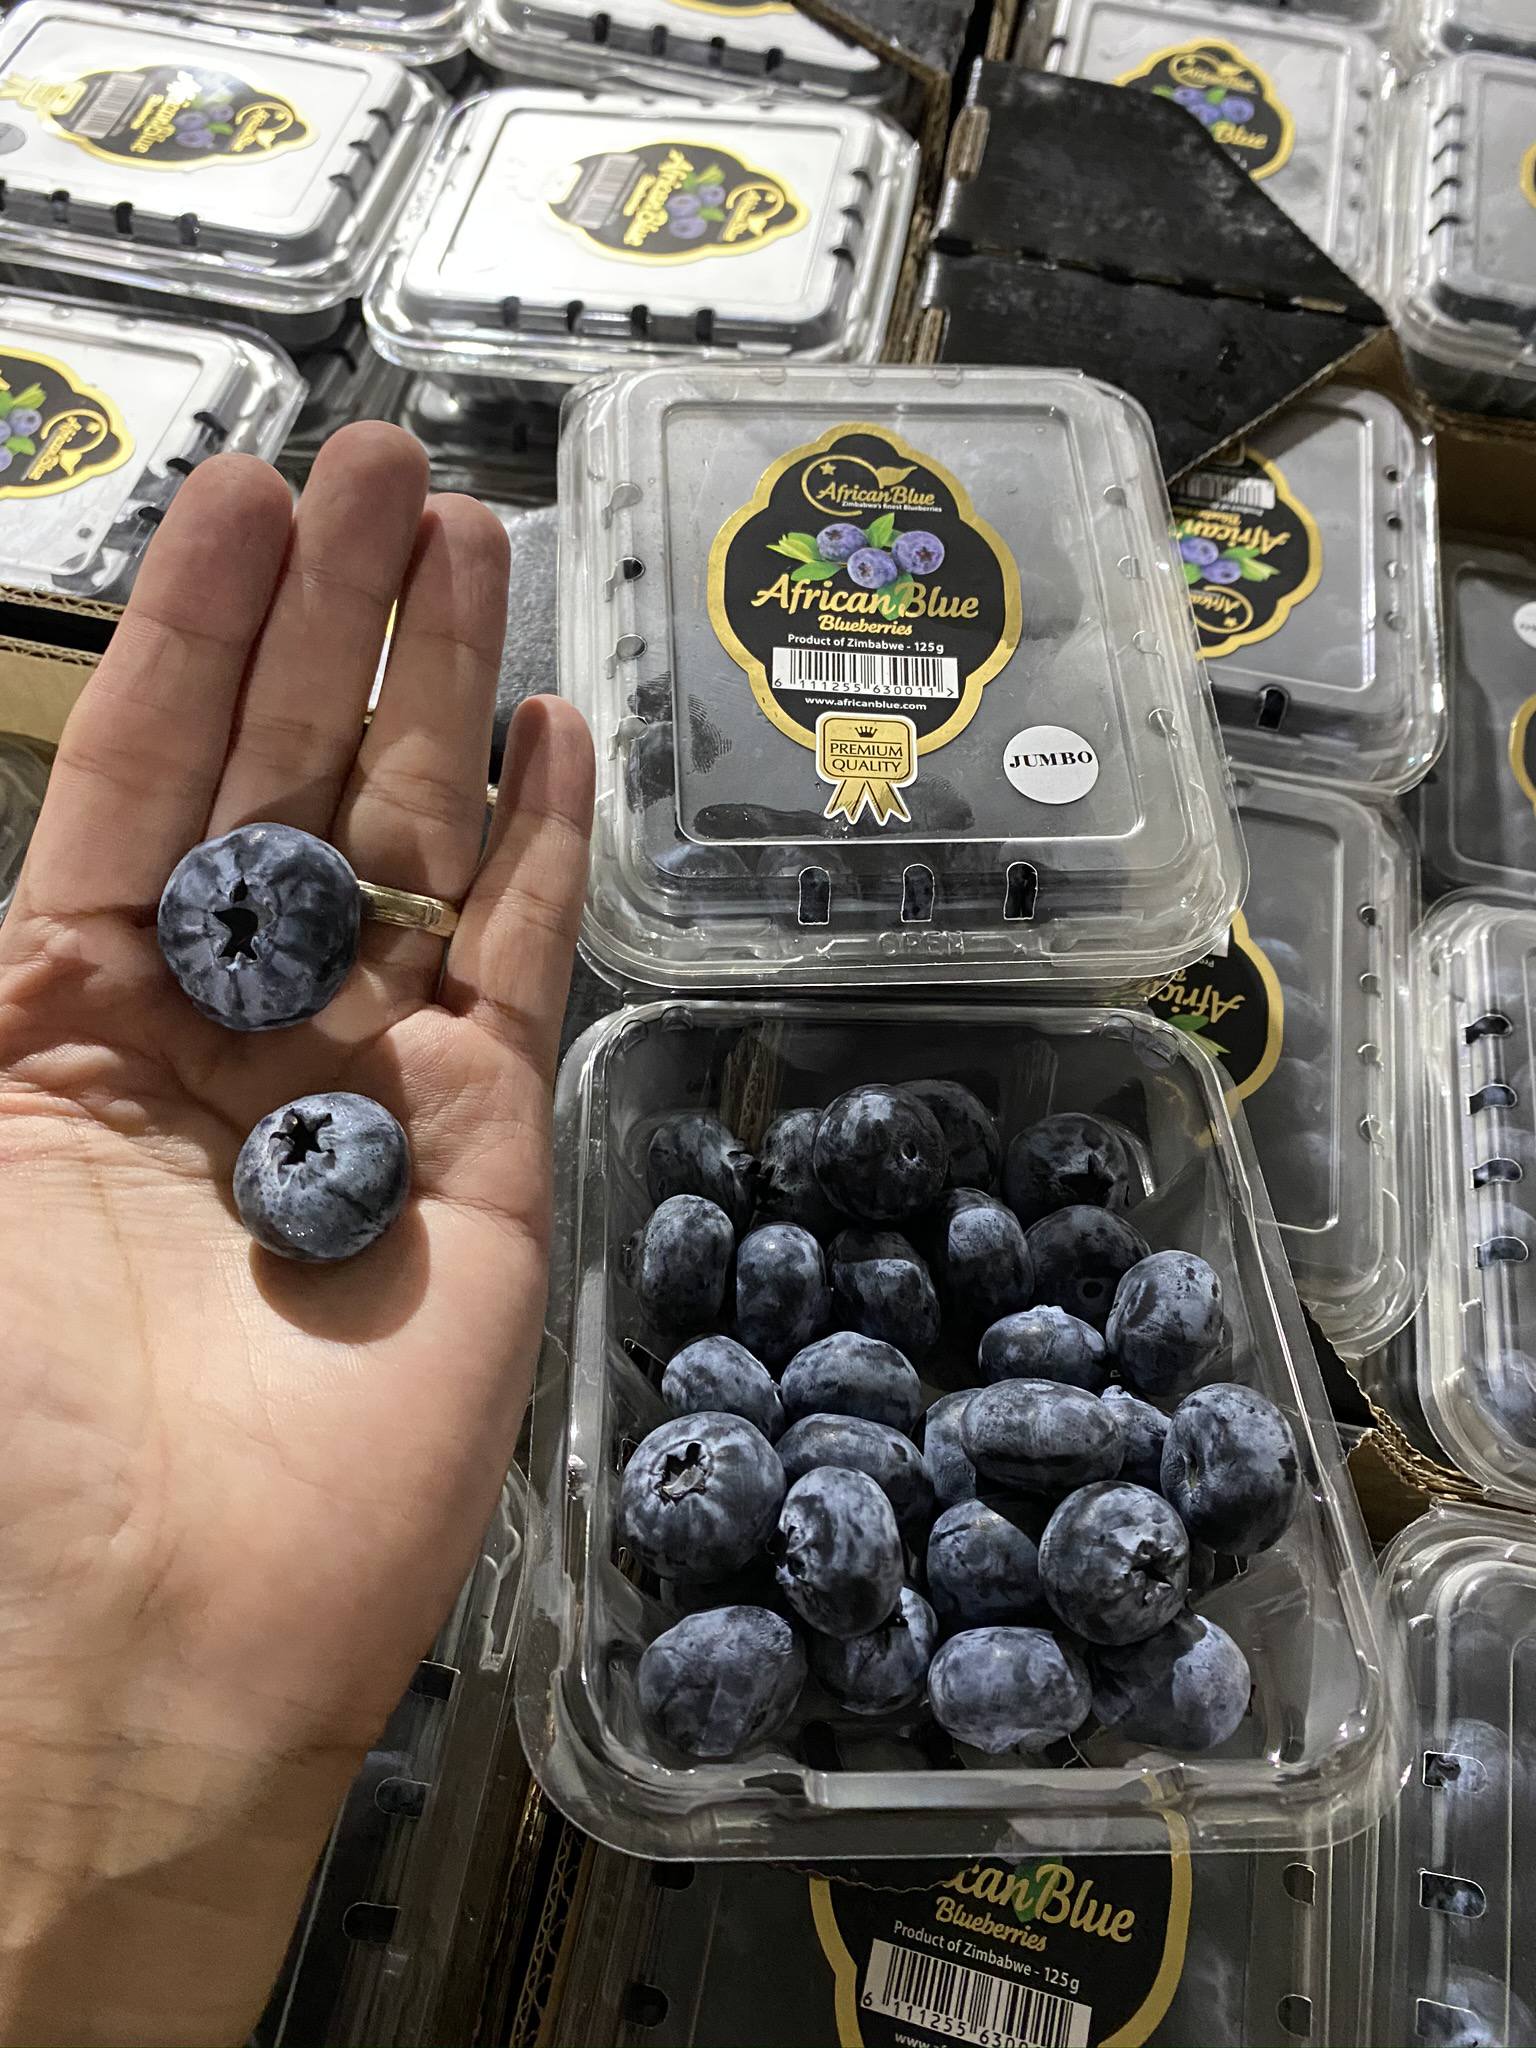 Blueberries Jumbo